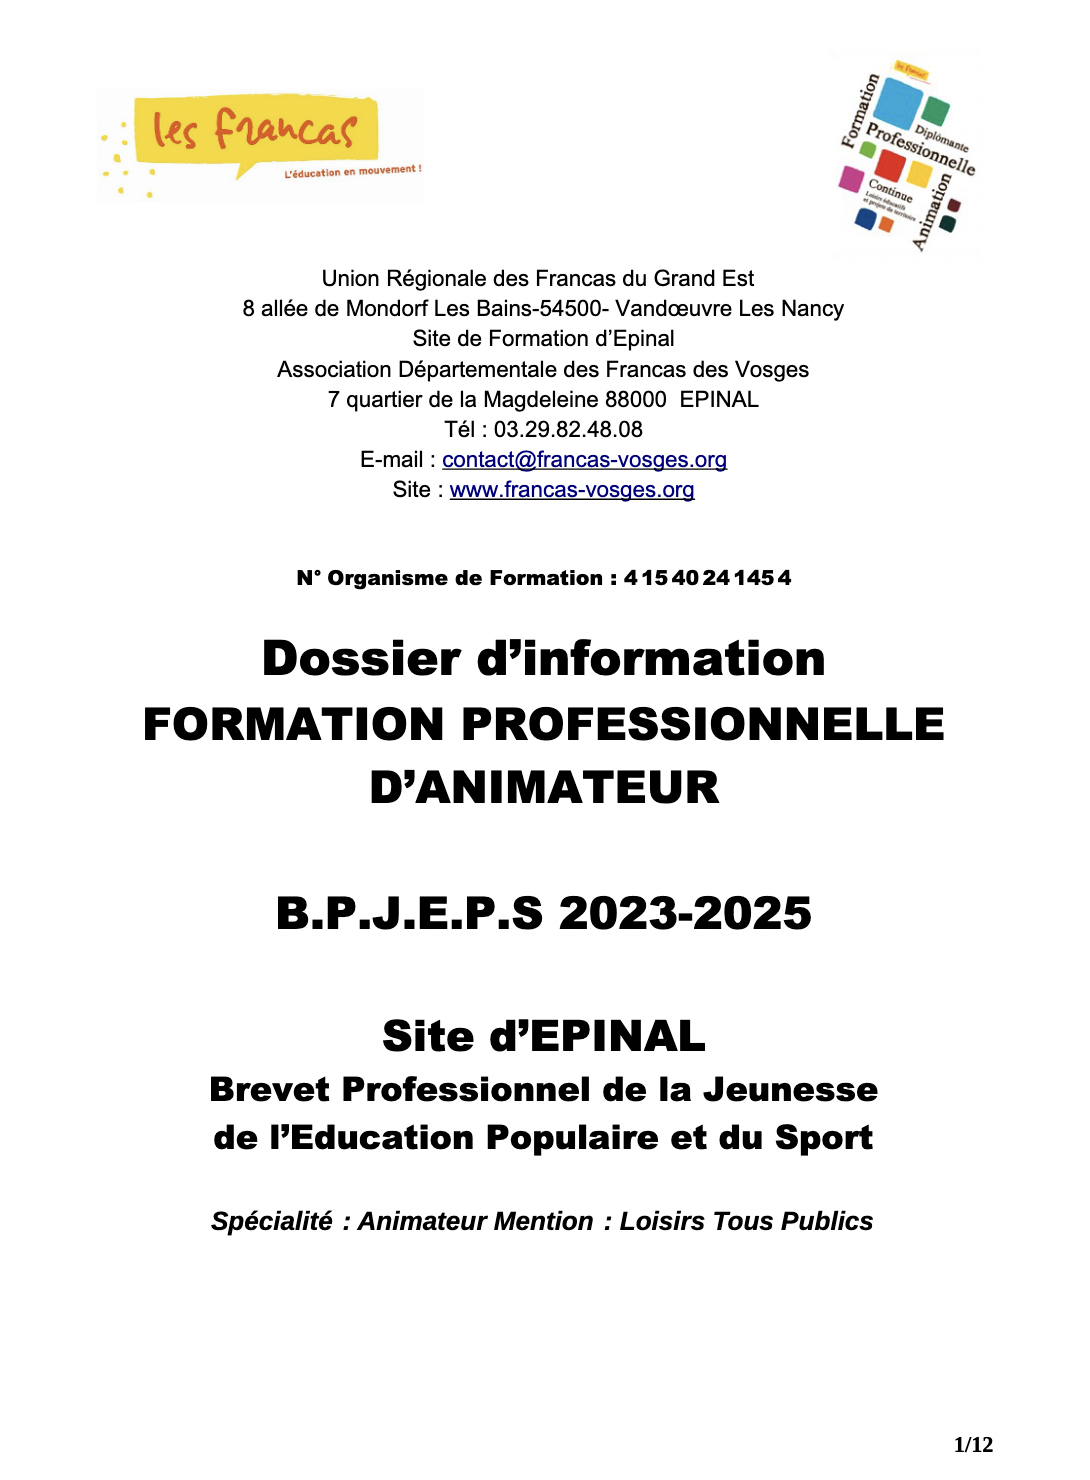 Dossier inscription BPJEPS LTP 2023-25 Francas